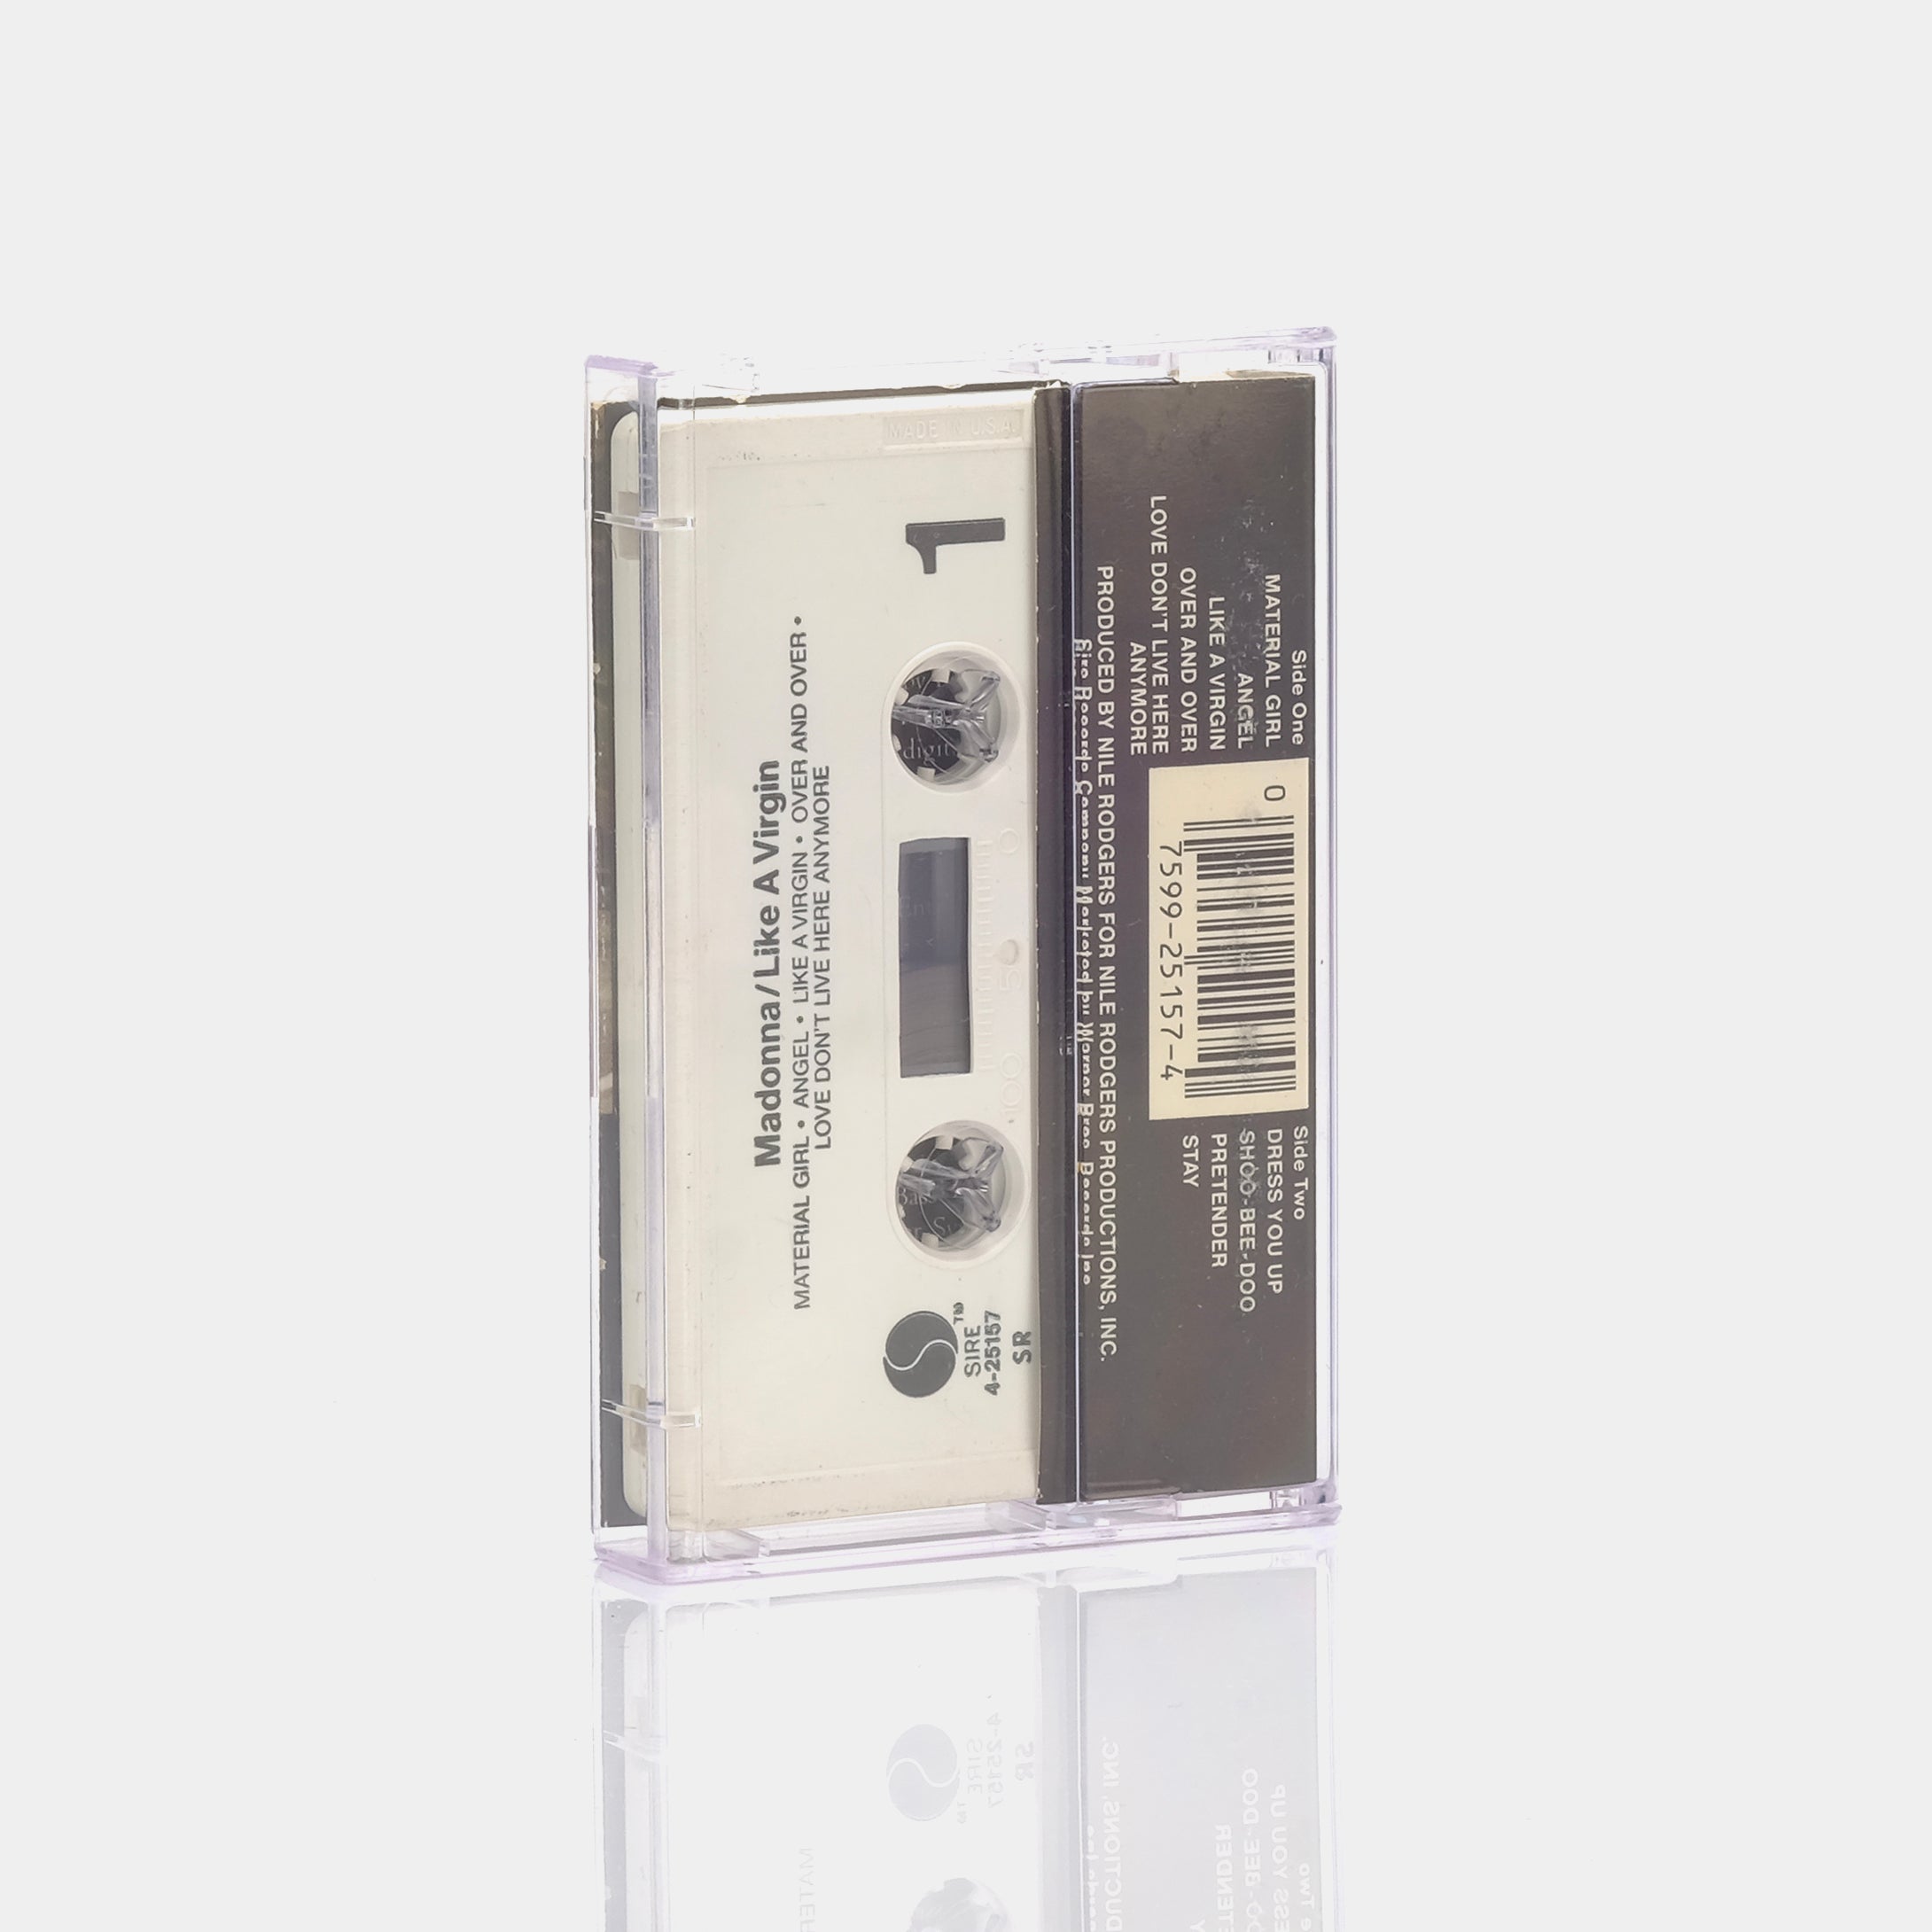 Madonna - Like A Virgin Cassette Tape